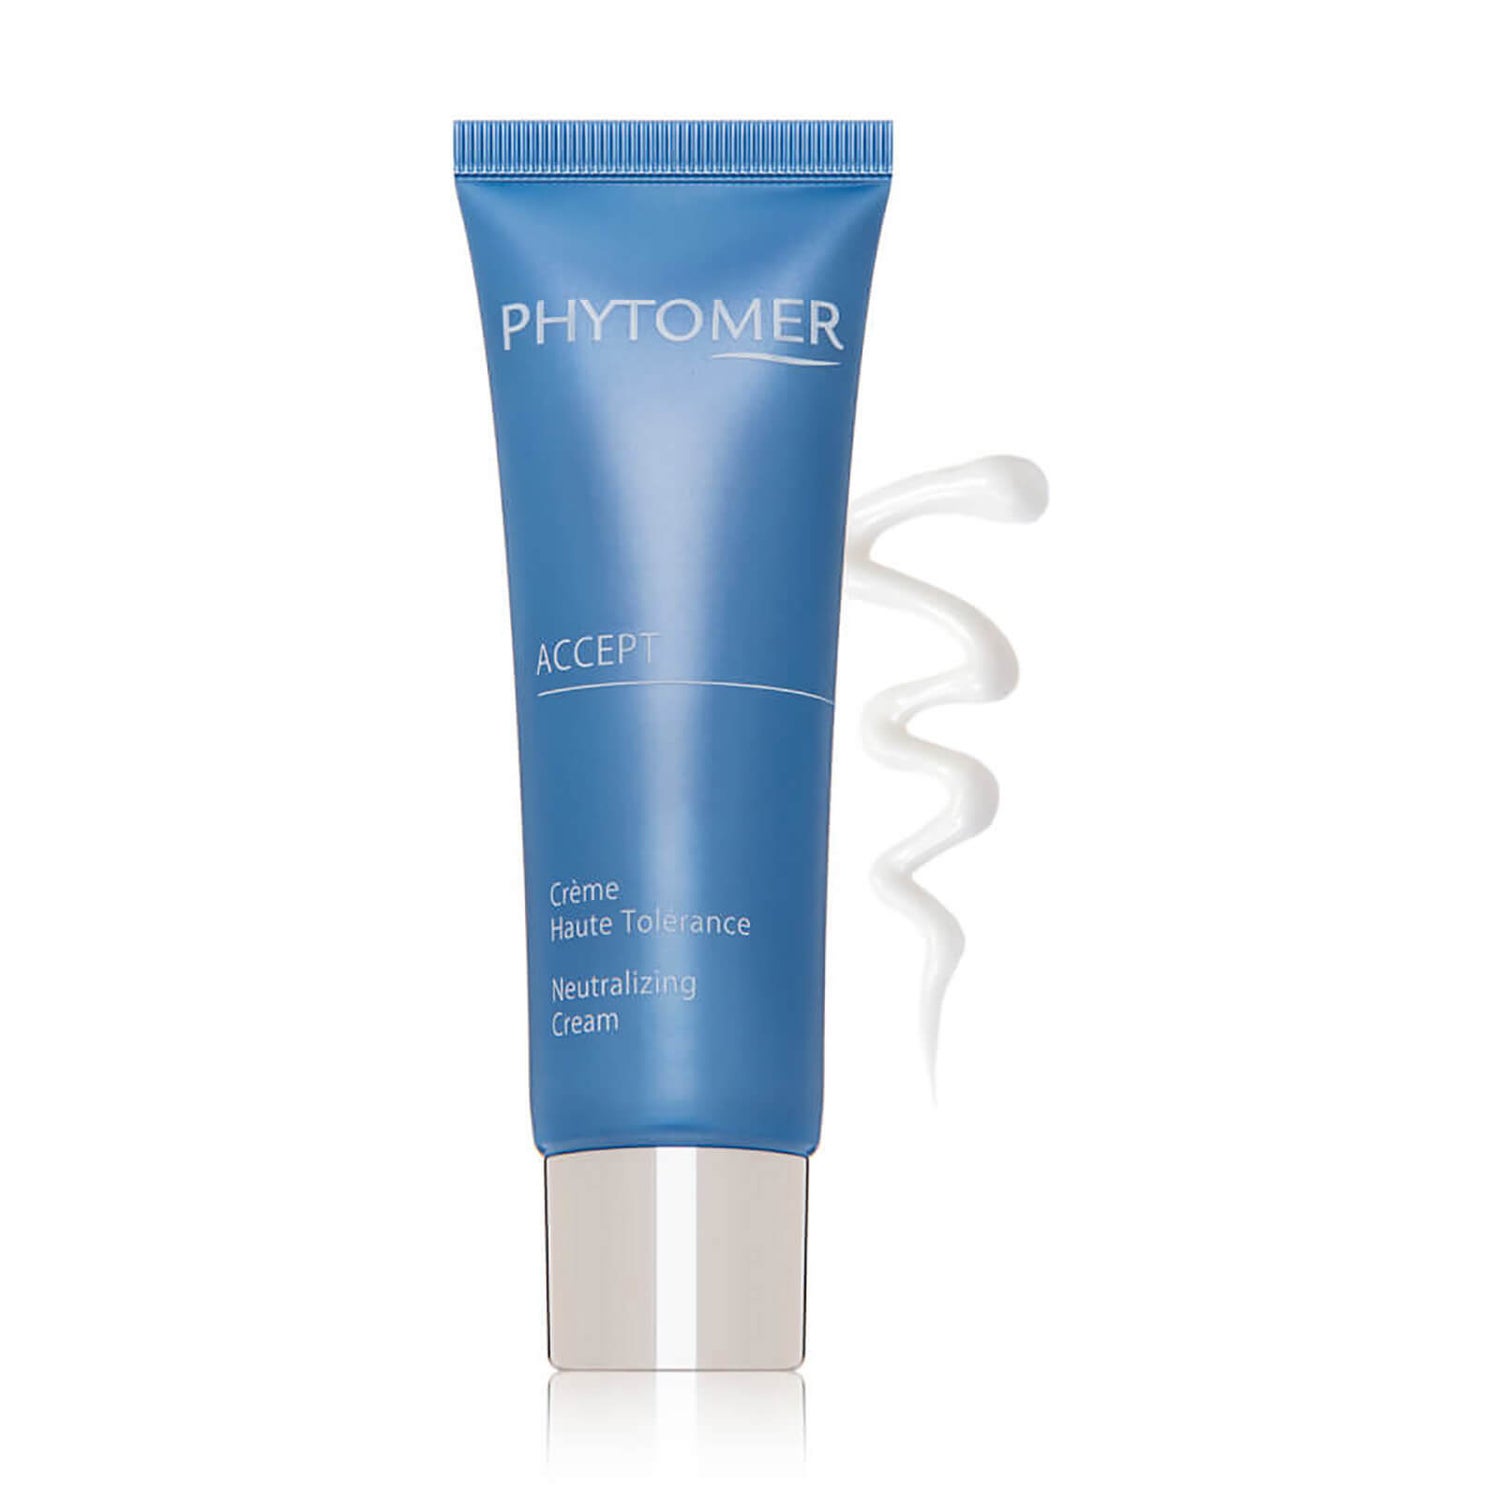 Phytomer Accept High Tolerance Cream (1.6 fl. oz.)